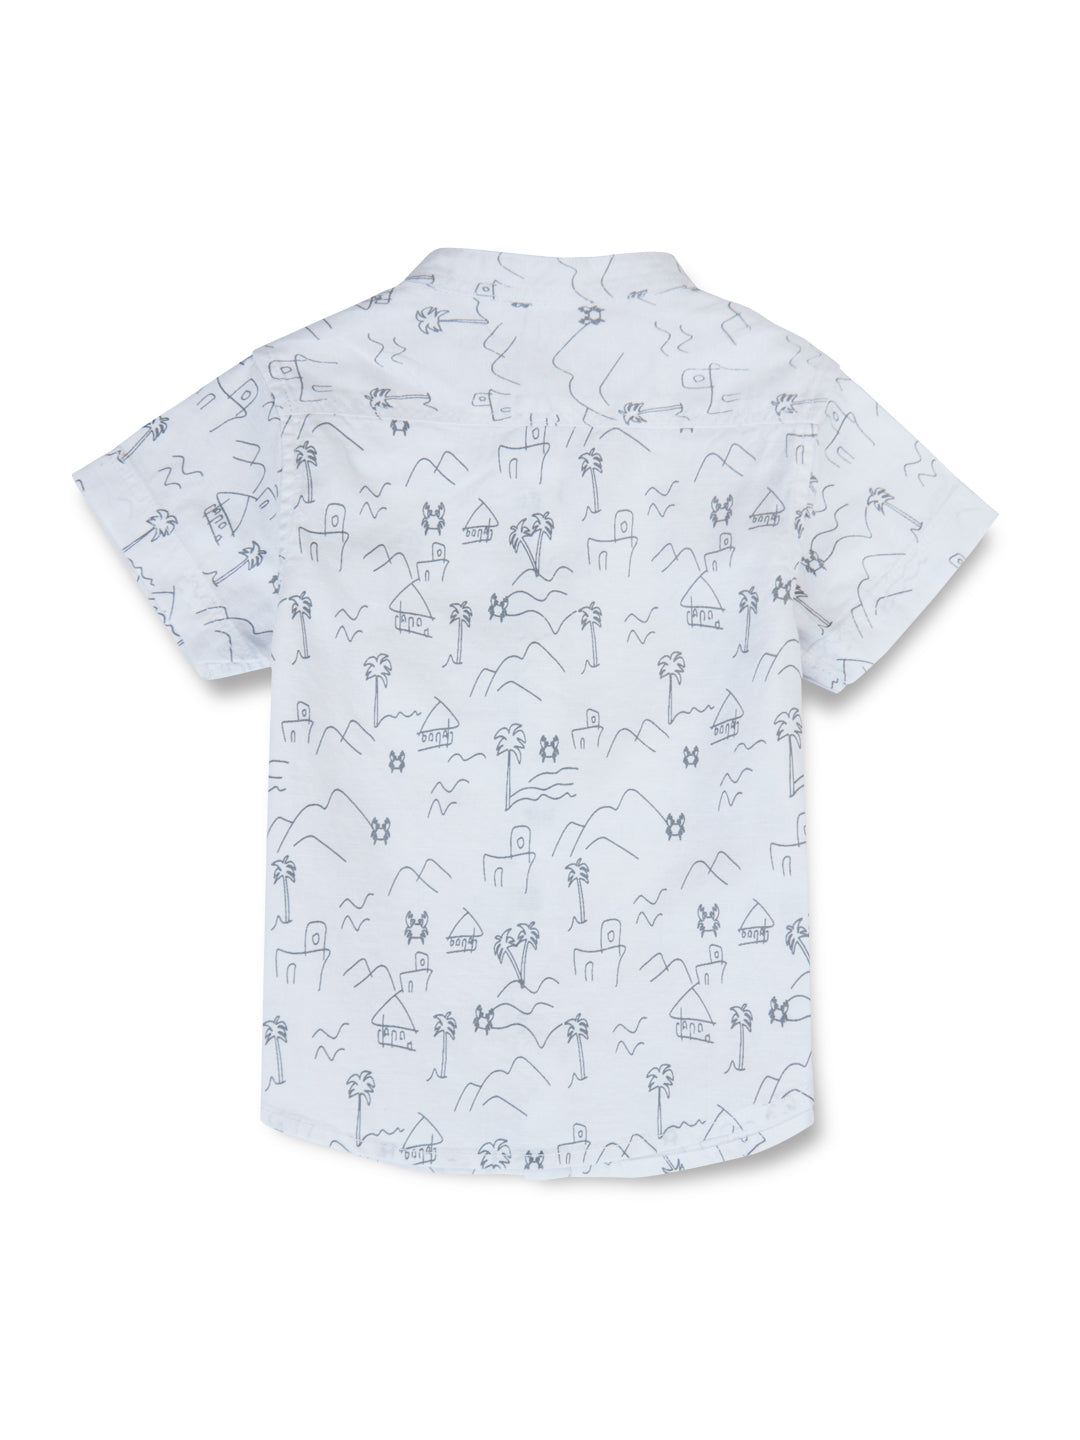 GJ Baby Boys Off White Cotton Graphic Print Mandarin Collar Half Sleeves Shirt